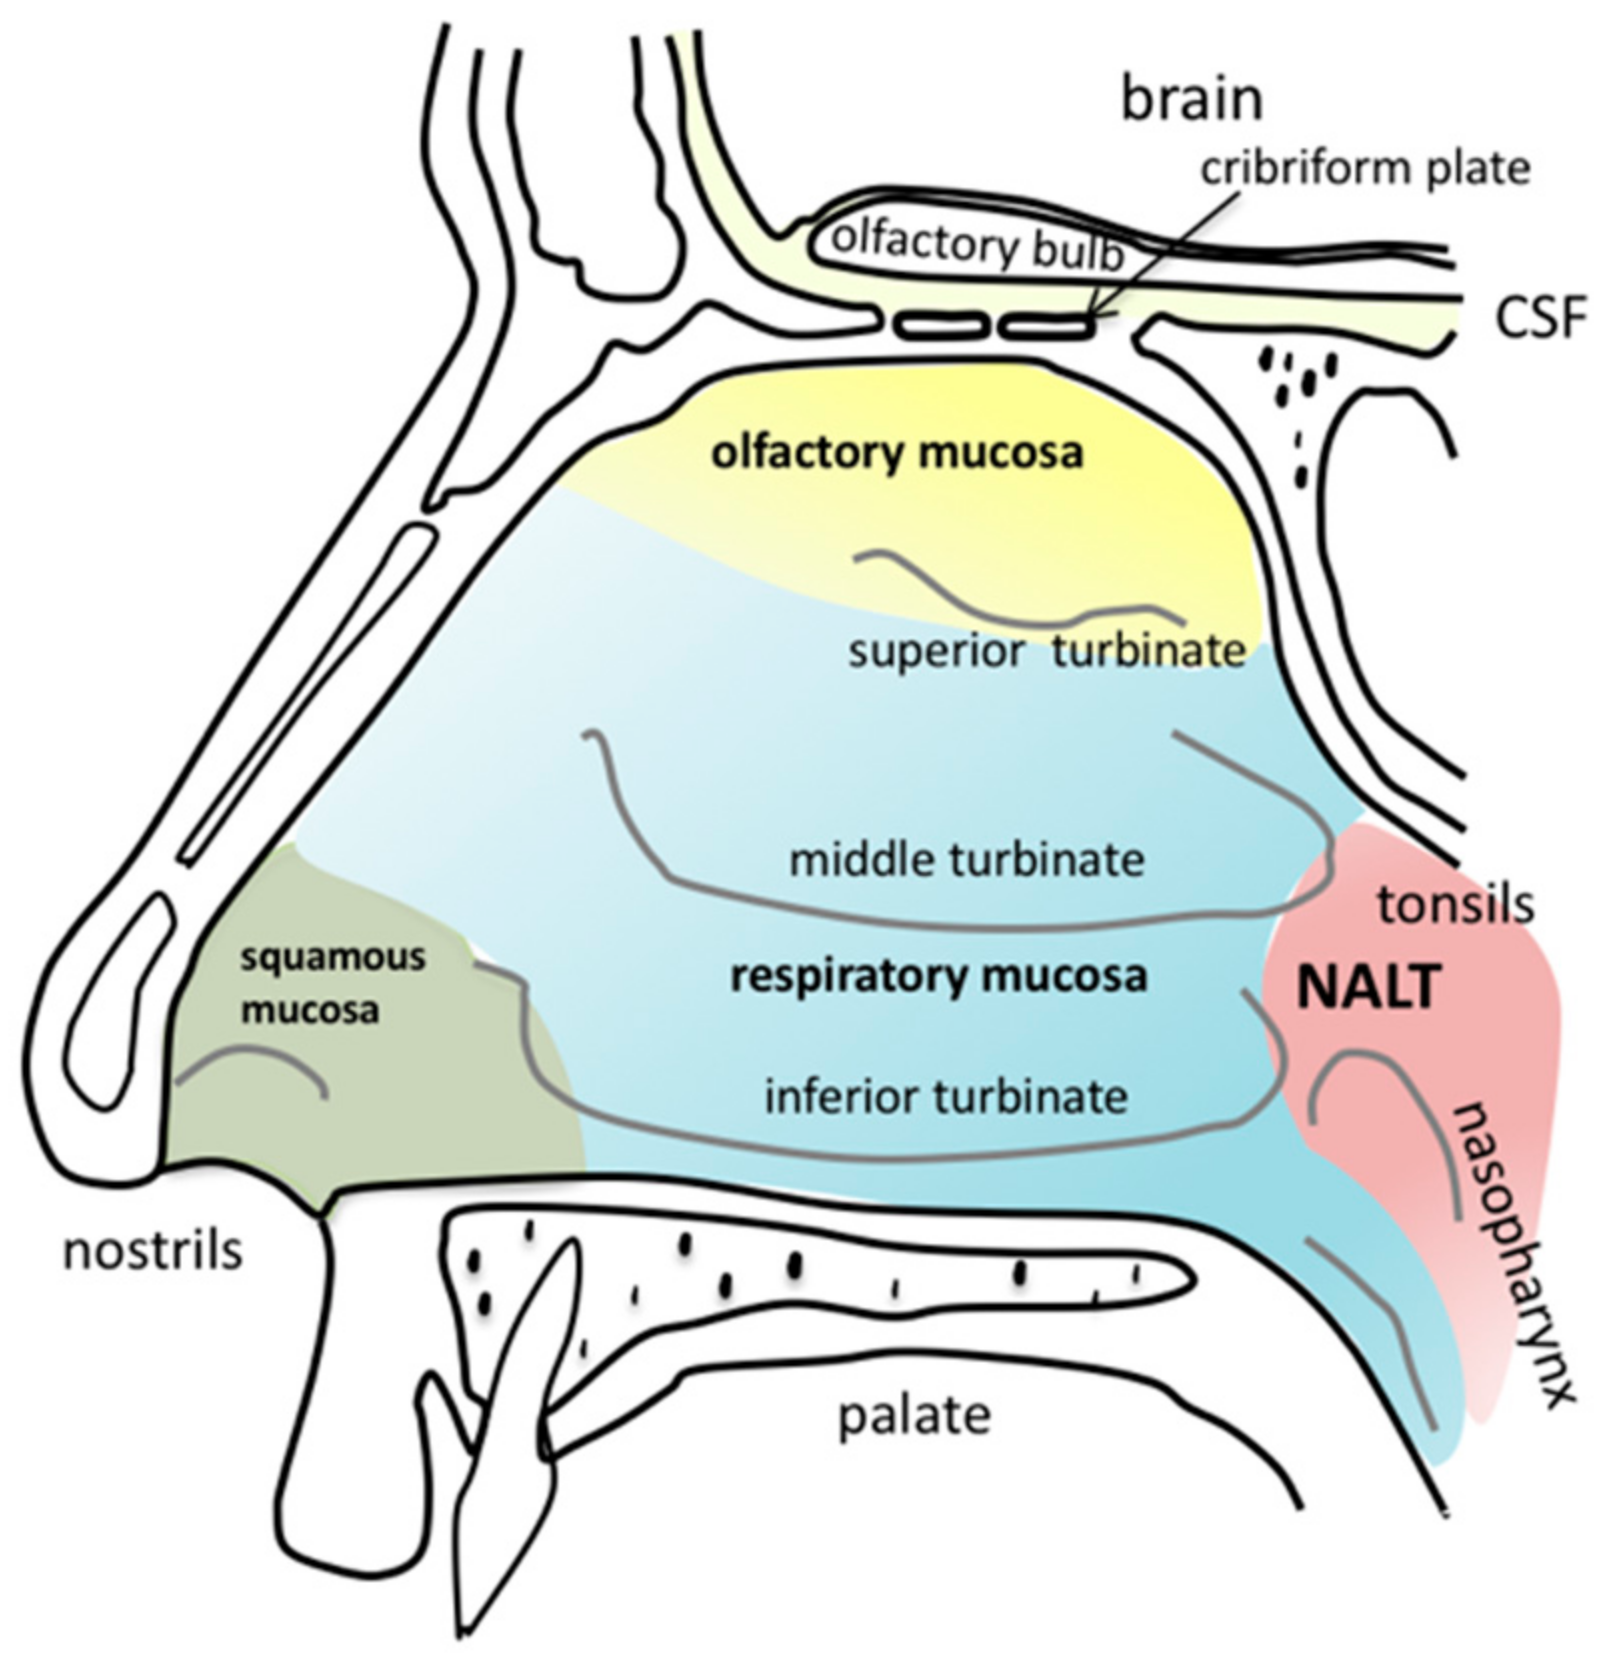 Nasal Anatomical Model Anatomy Of Nose And Paranasal Sinuses Of Frontal